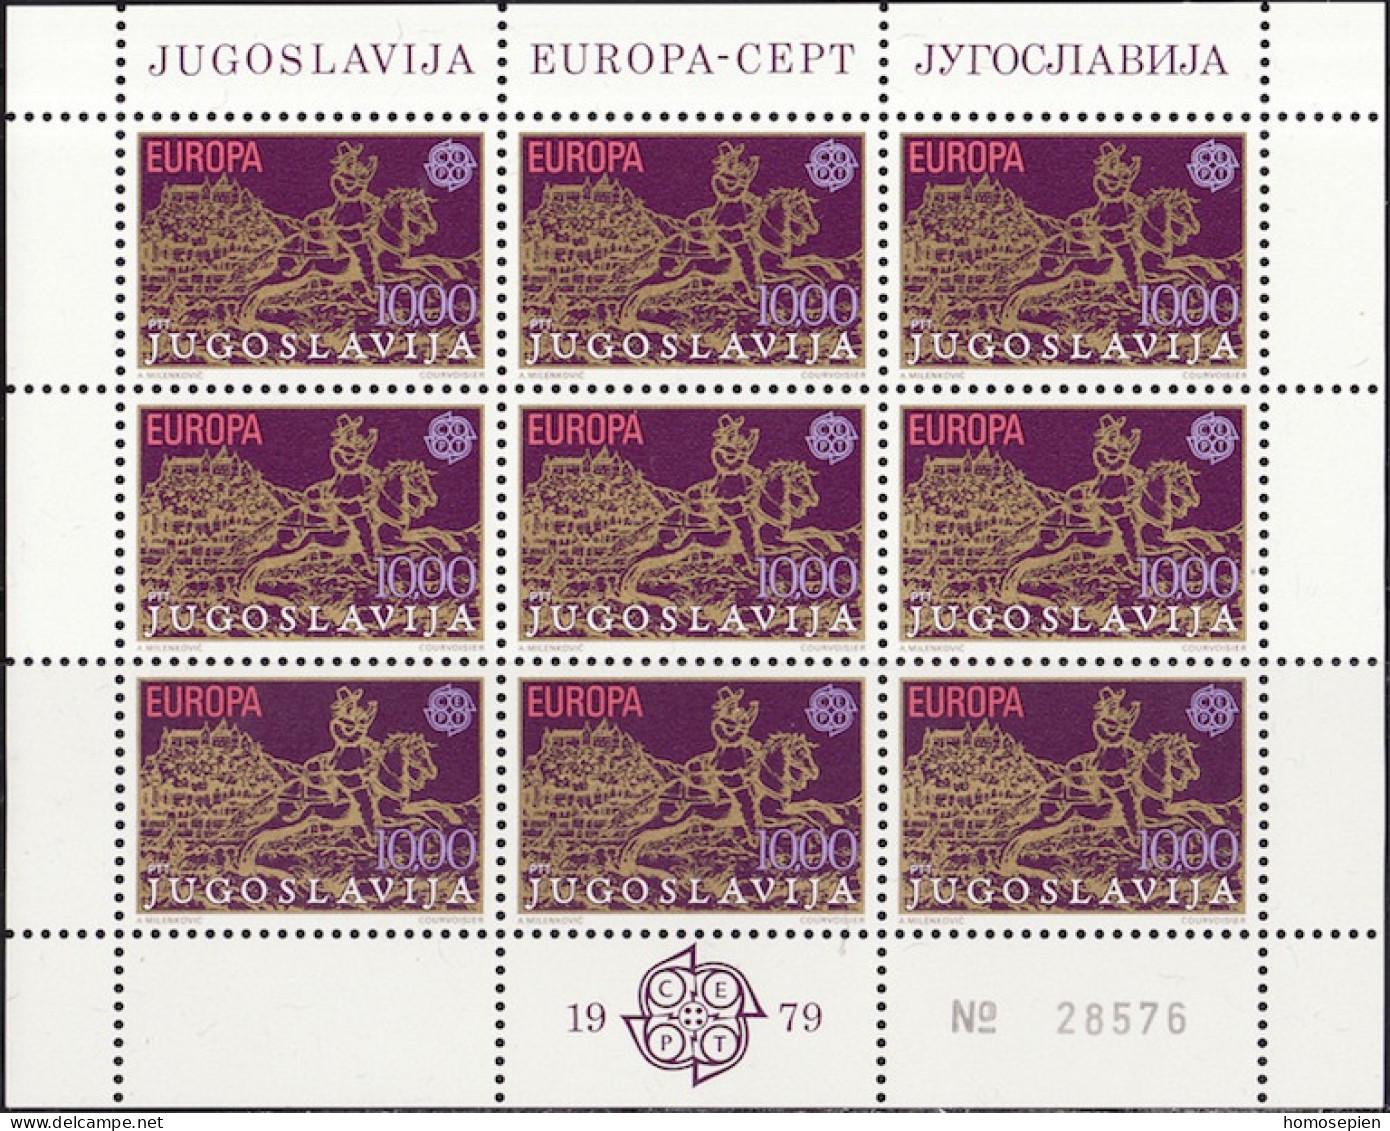 Yougoslavie - Jugoslawien - Yugoslavia Bloc Feuillet 1979 Y&T N°F1663 à F1664 - Michel N°KB1787 à KB1788 *** - EUROPA - Blocs-feuillets